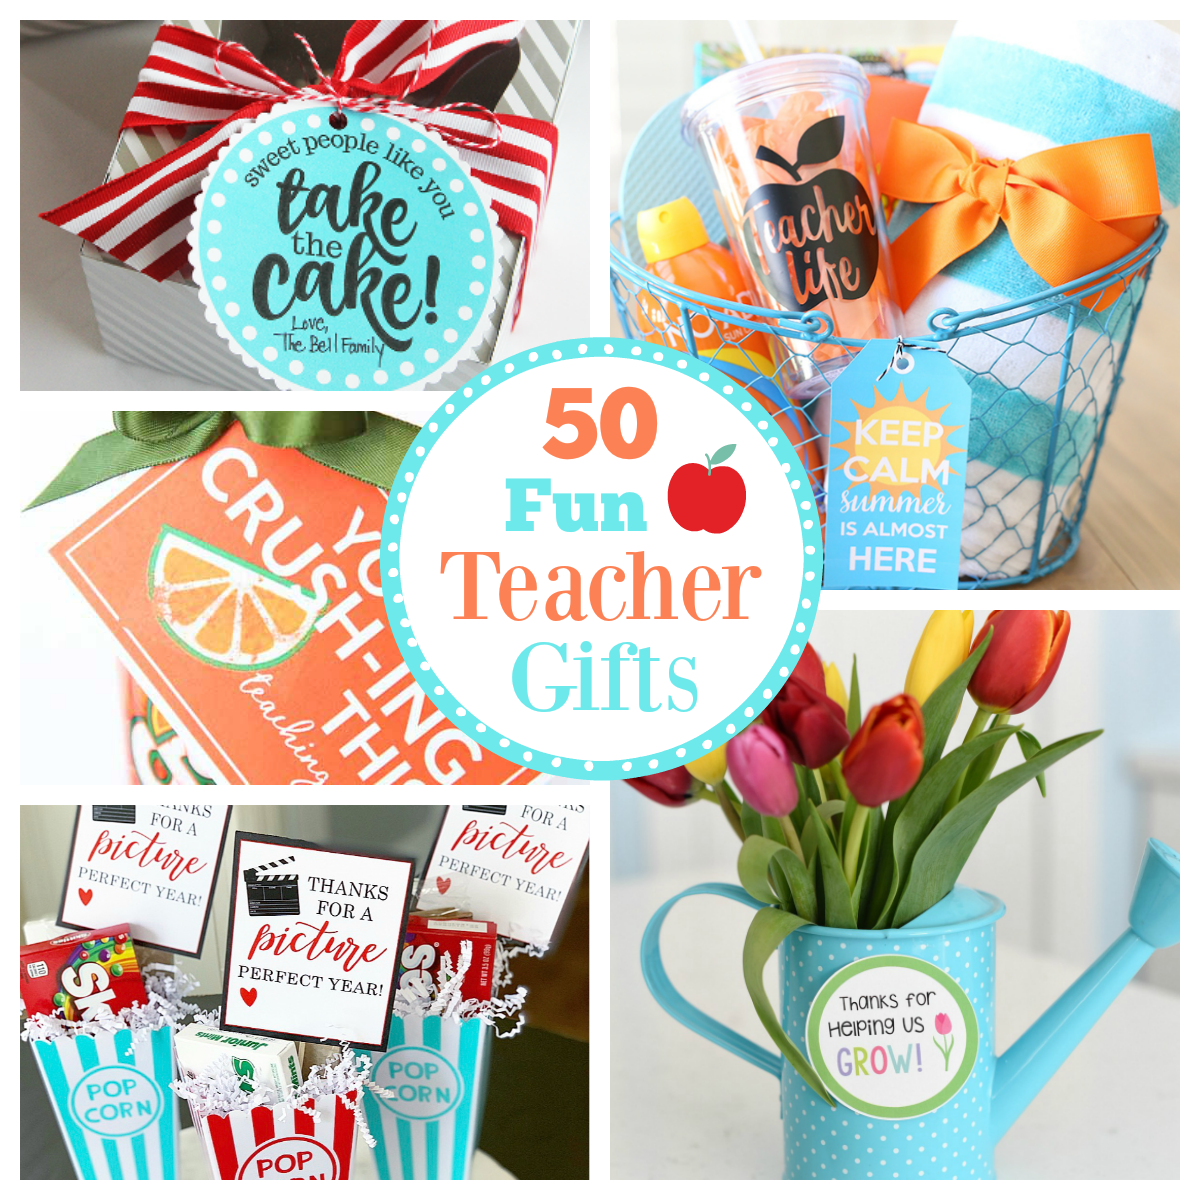 Fun Teacher Gift Ideas: